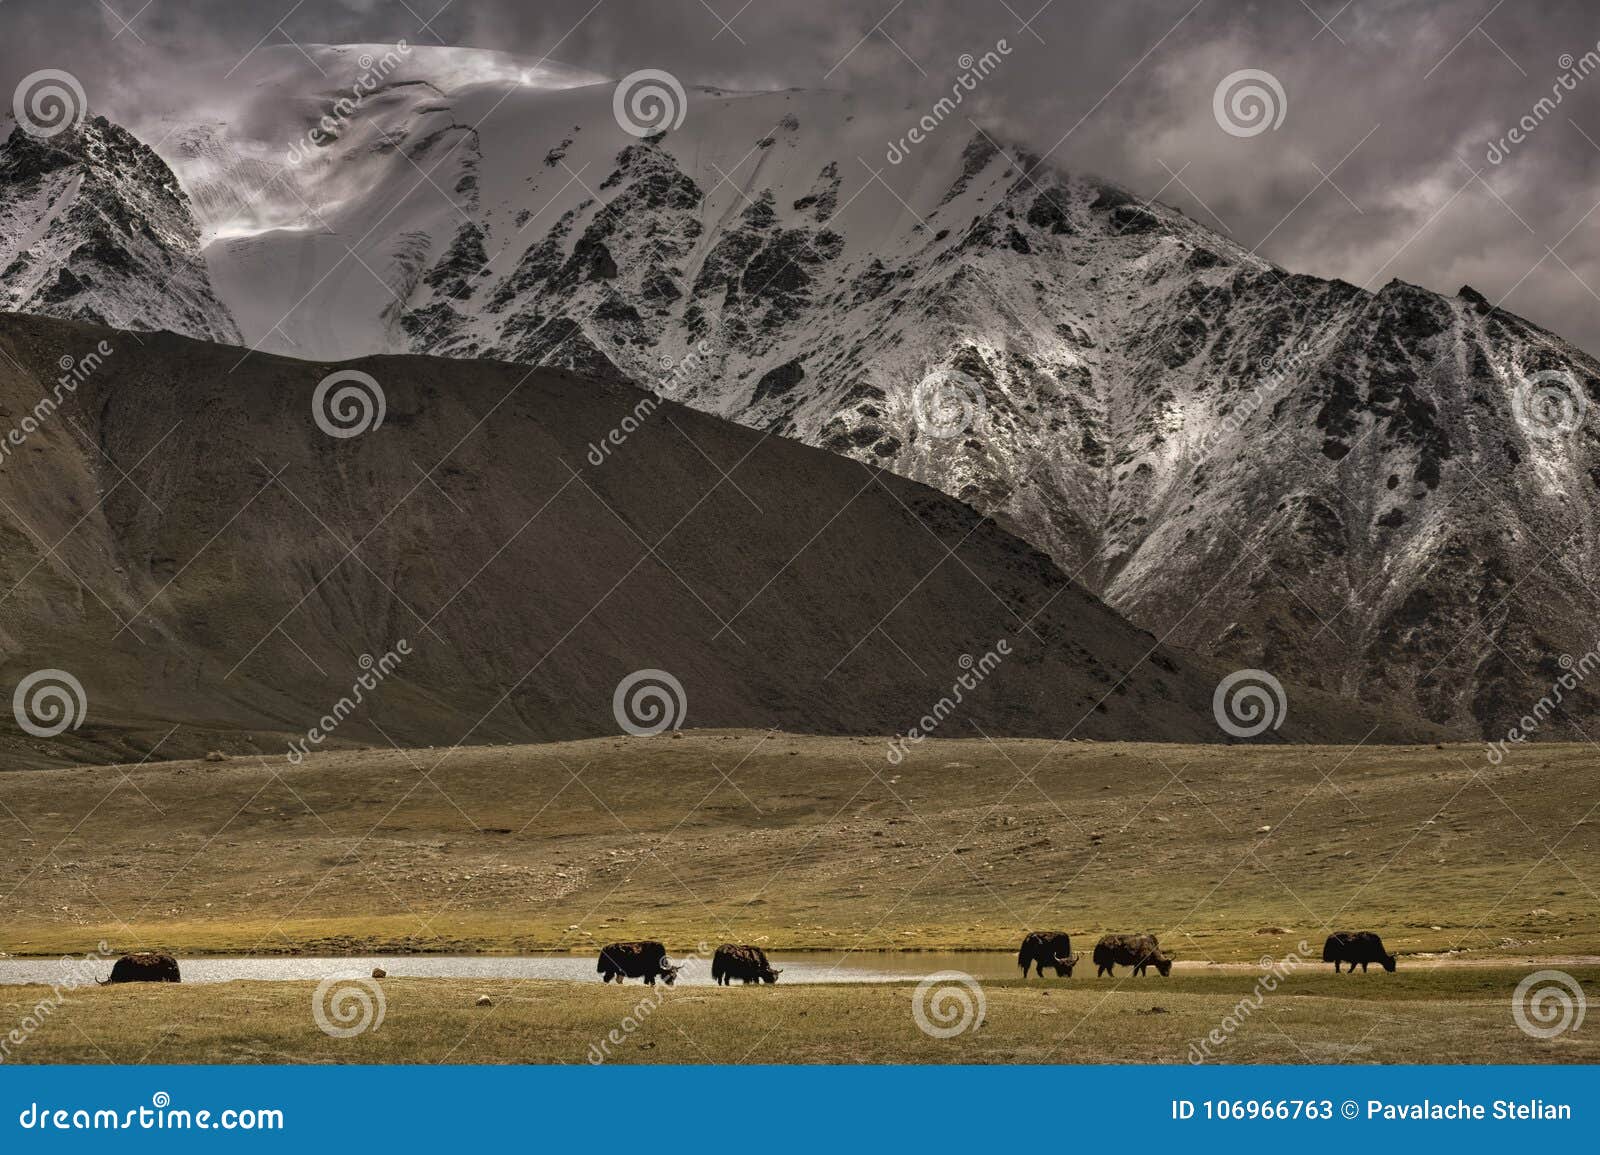 a herd of yaks graze in shimshal at 4800m